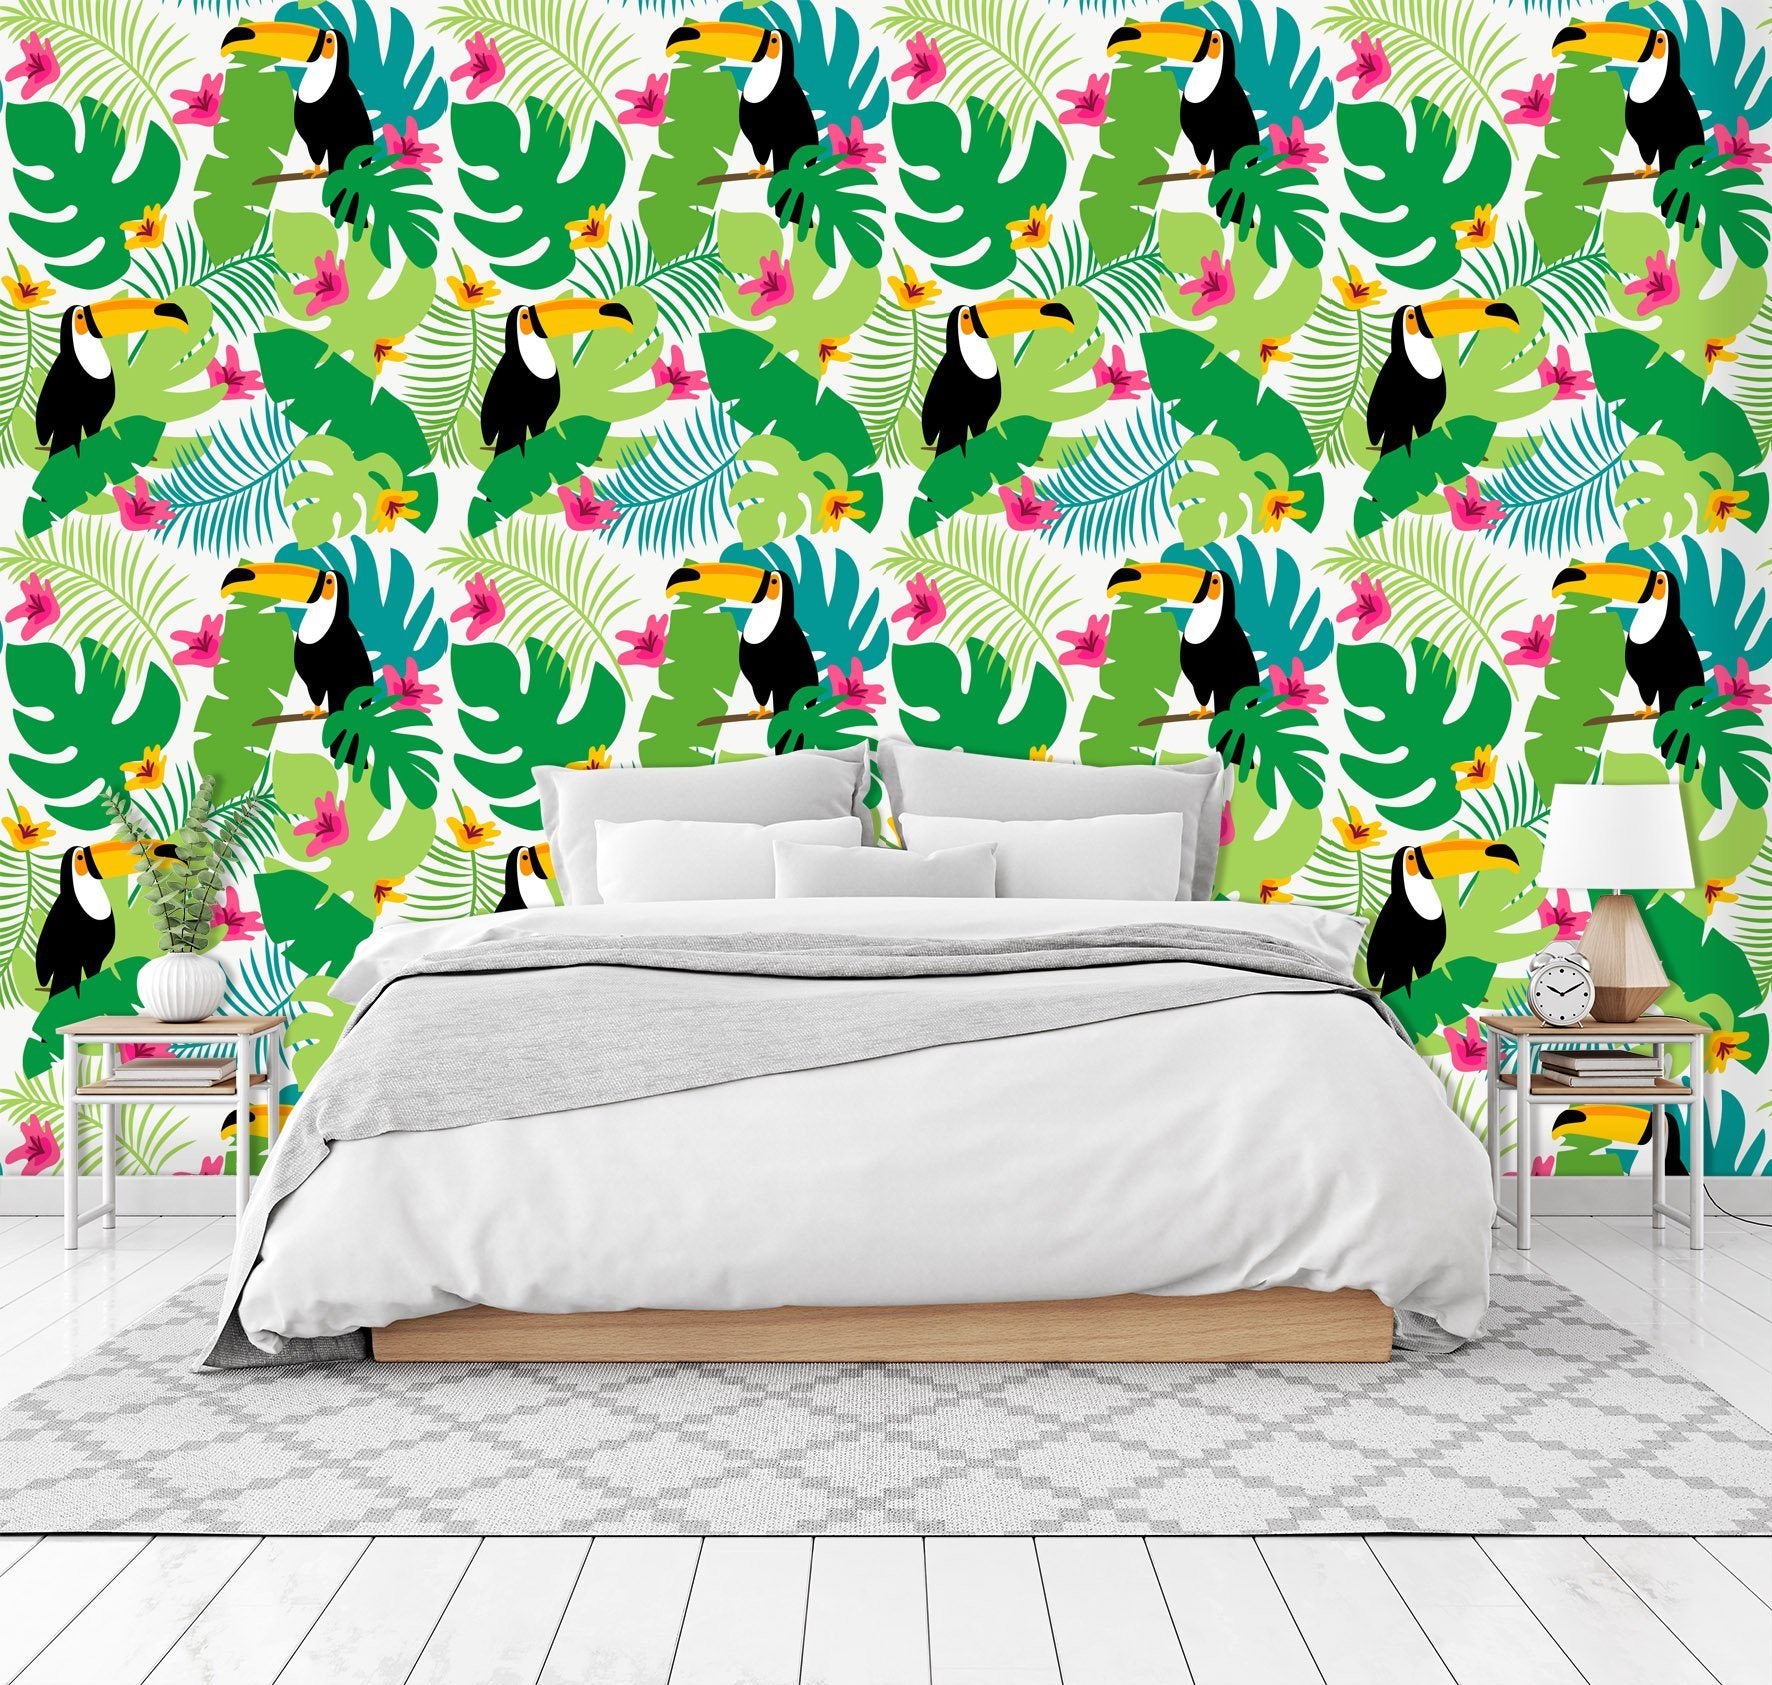 3D Long-Billed Parrot 419 Wallpaper AJ Wallpaper 